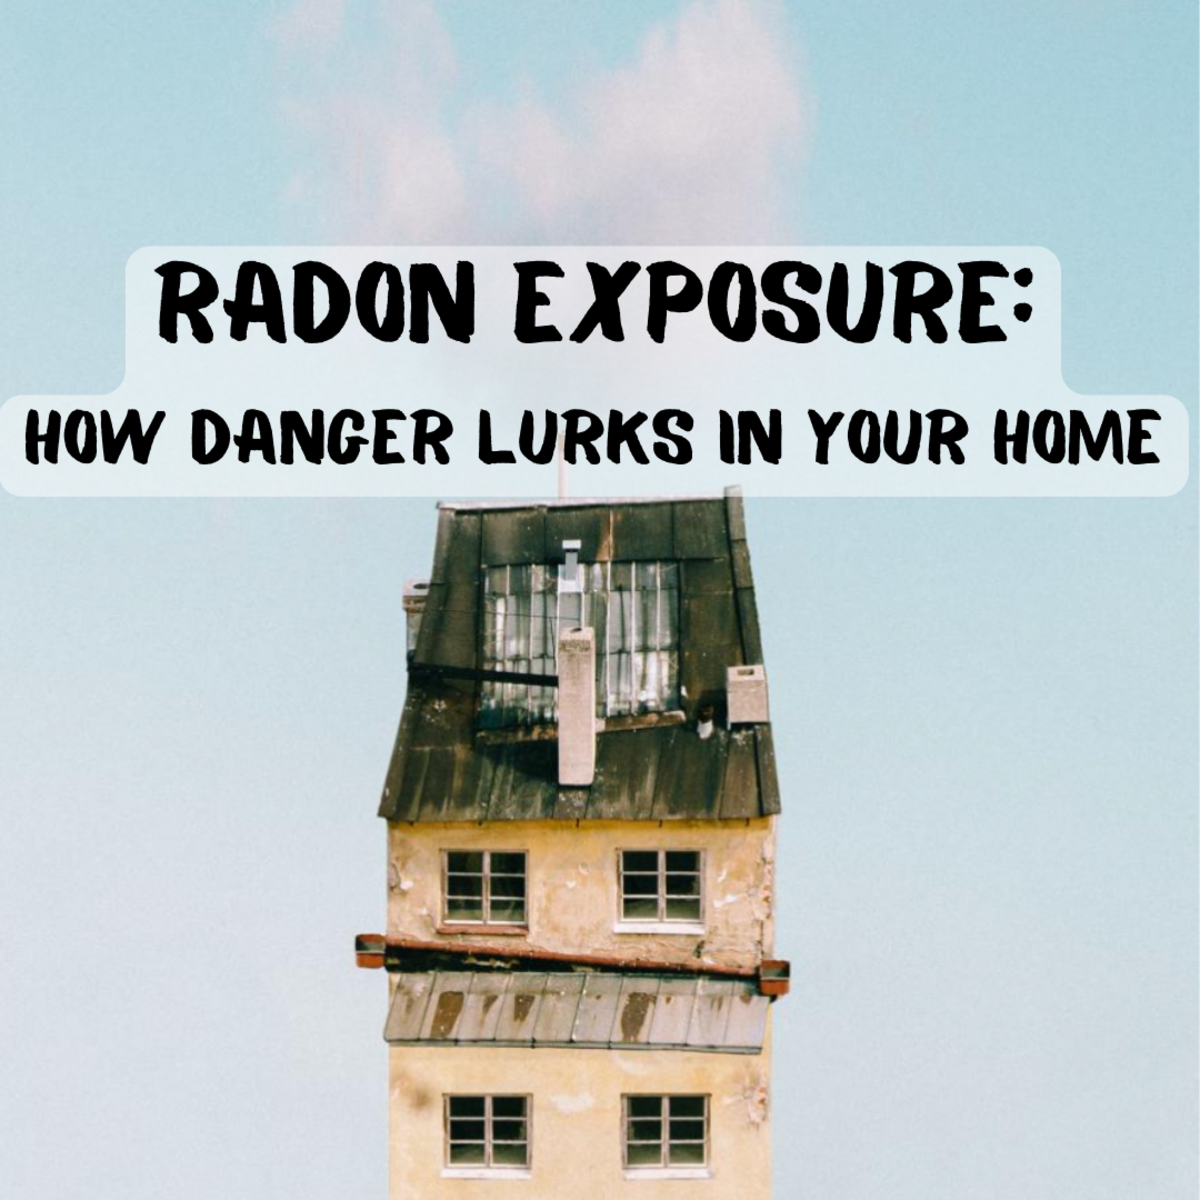 Radon Exposure: How Danger Lurks in Your Home